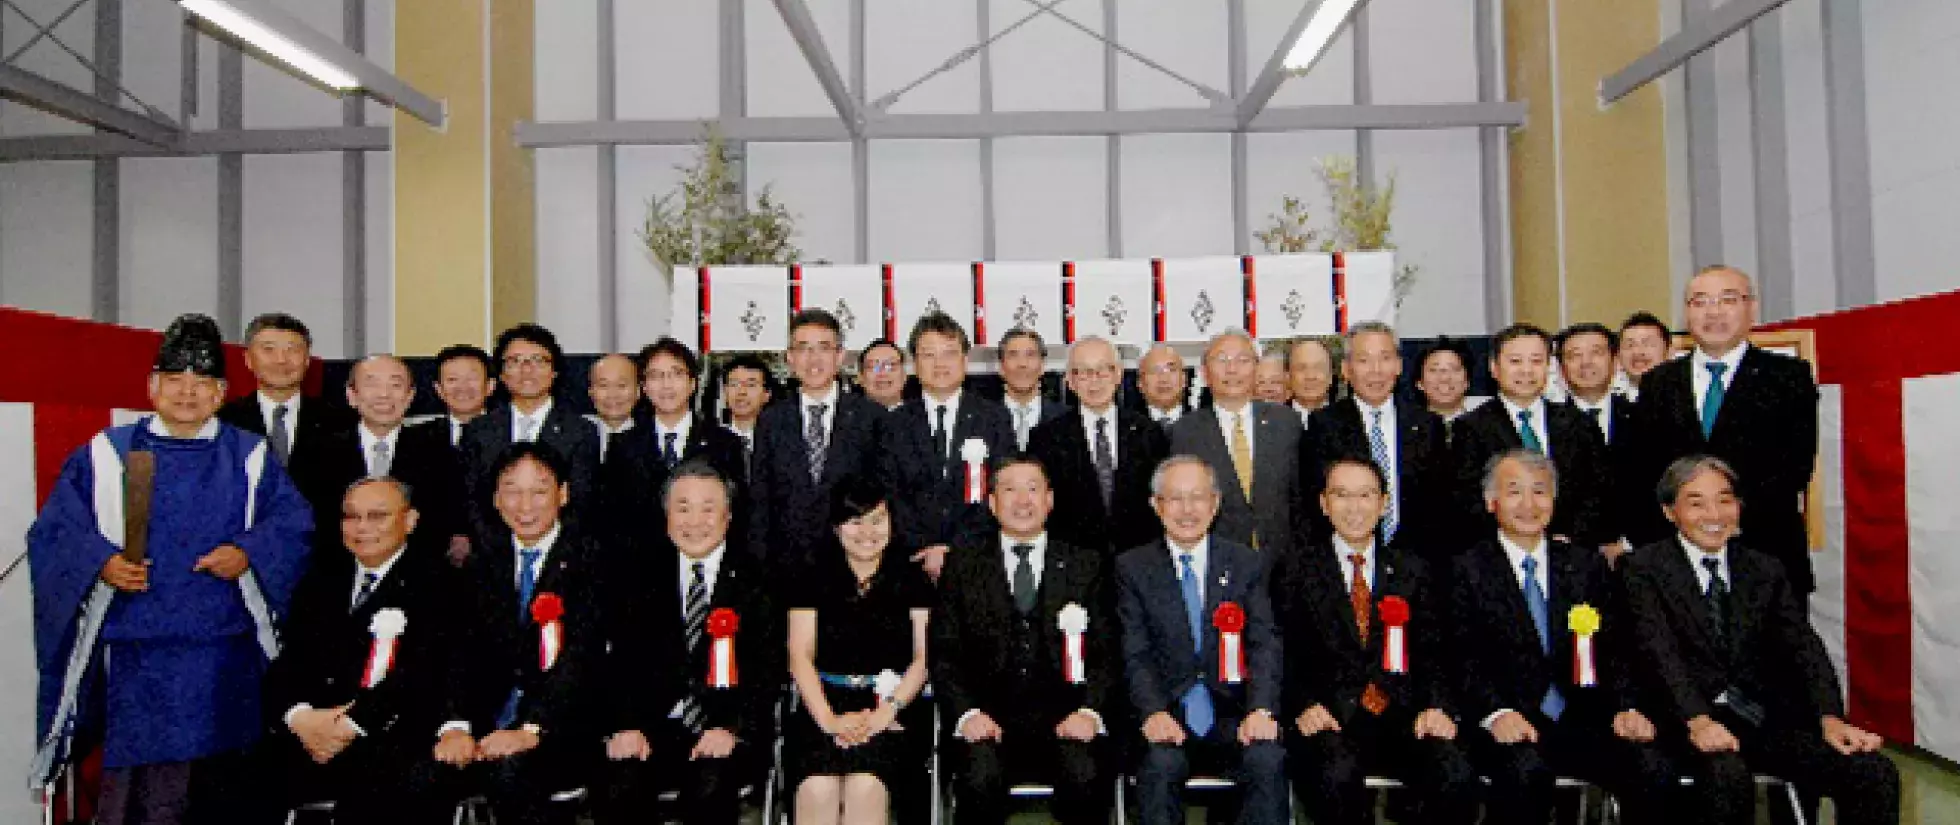 Commemorative photograph of the ceremony participants